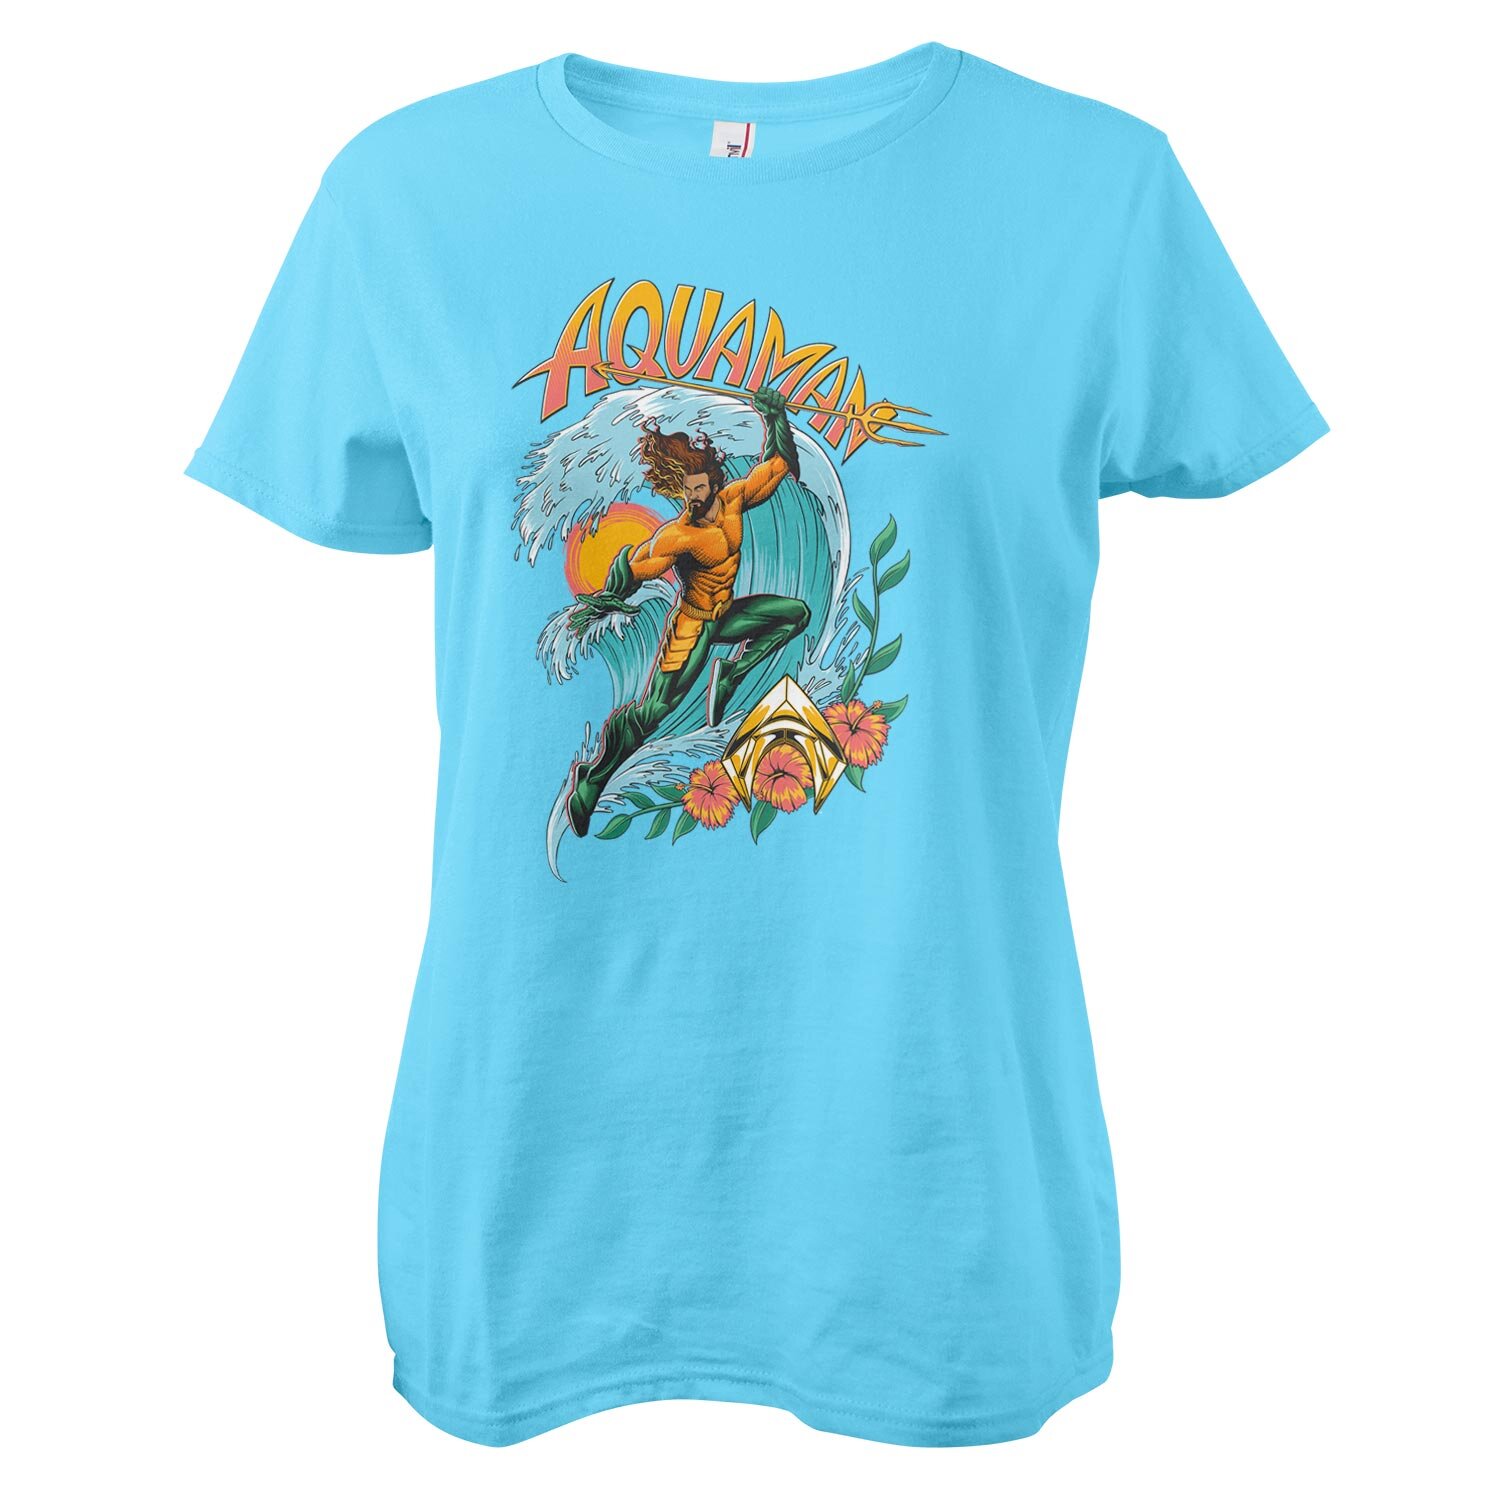 Aquaman Surf Style Girly Tee